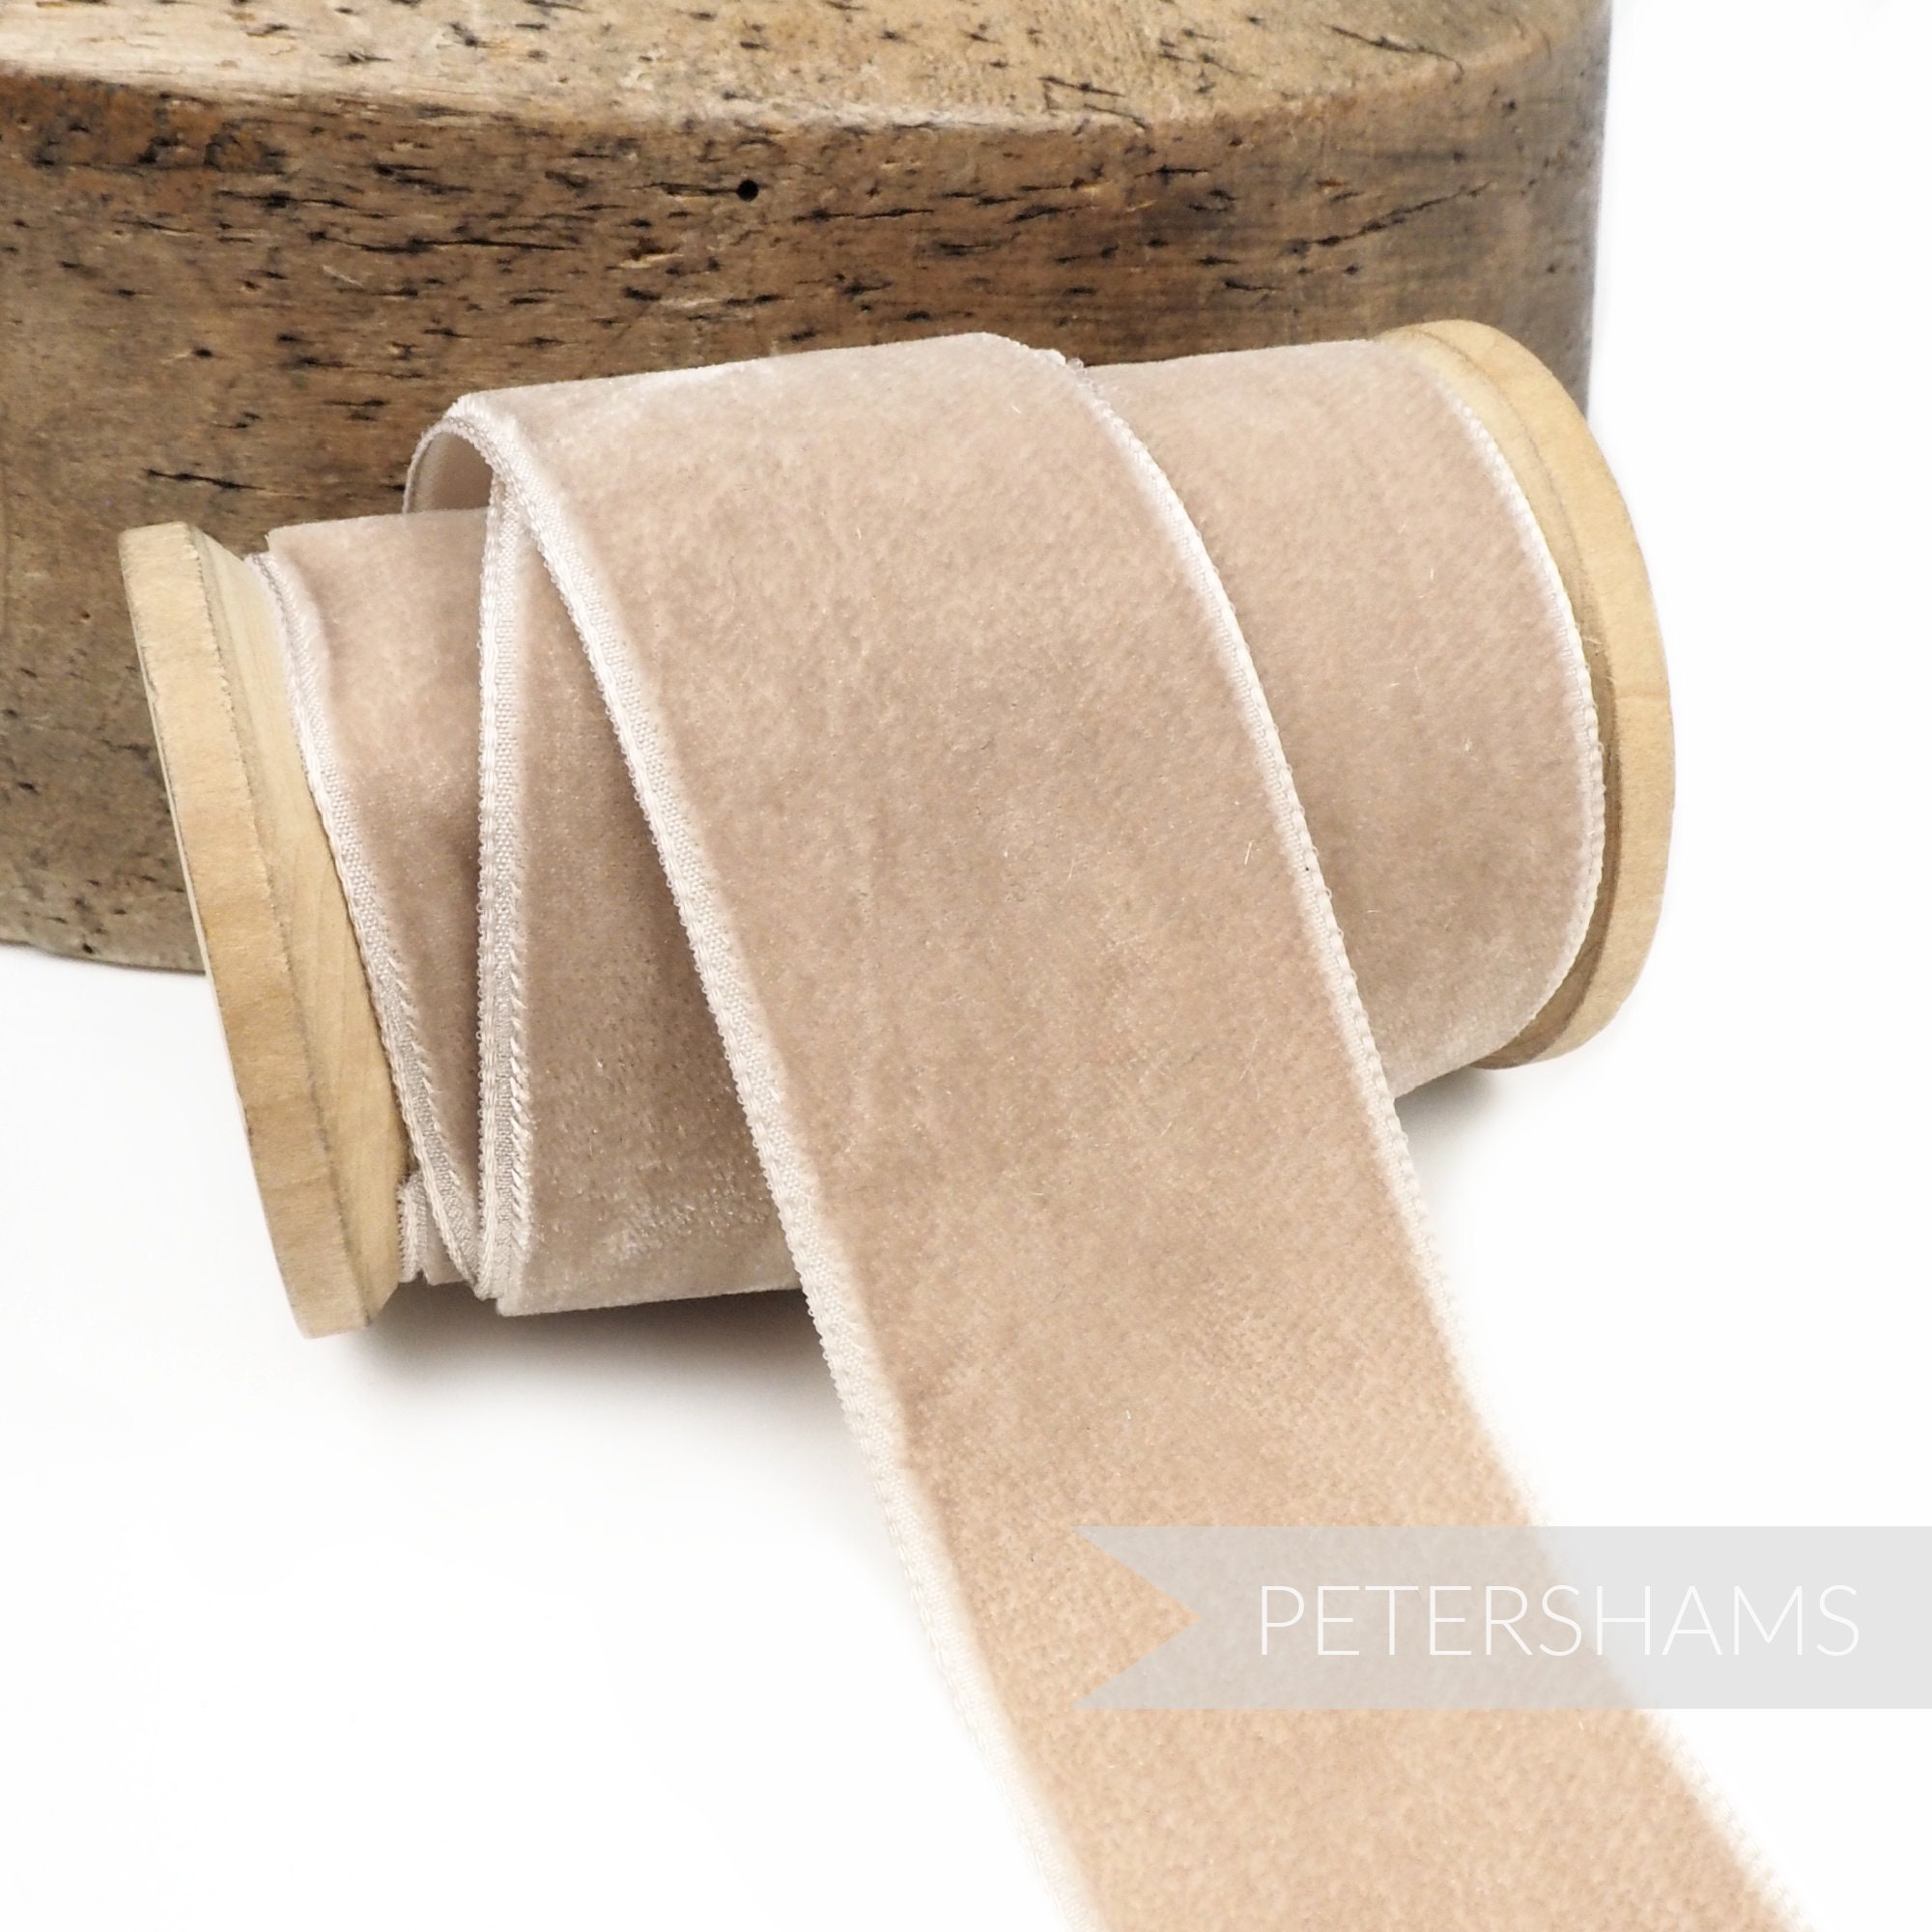 Silk chiffon ribbon 2.5cm width / Extra light bias cut silk ribbon /  DyeingHouseGallery DHG / 100% Silk chiffon / Color: Sand